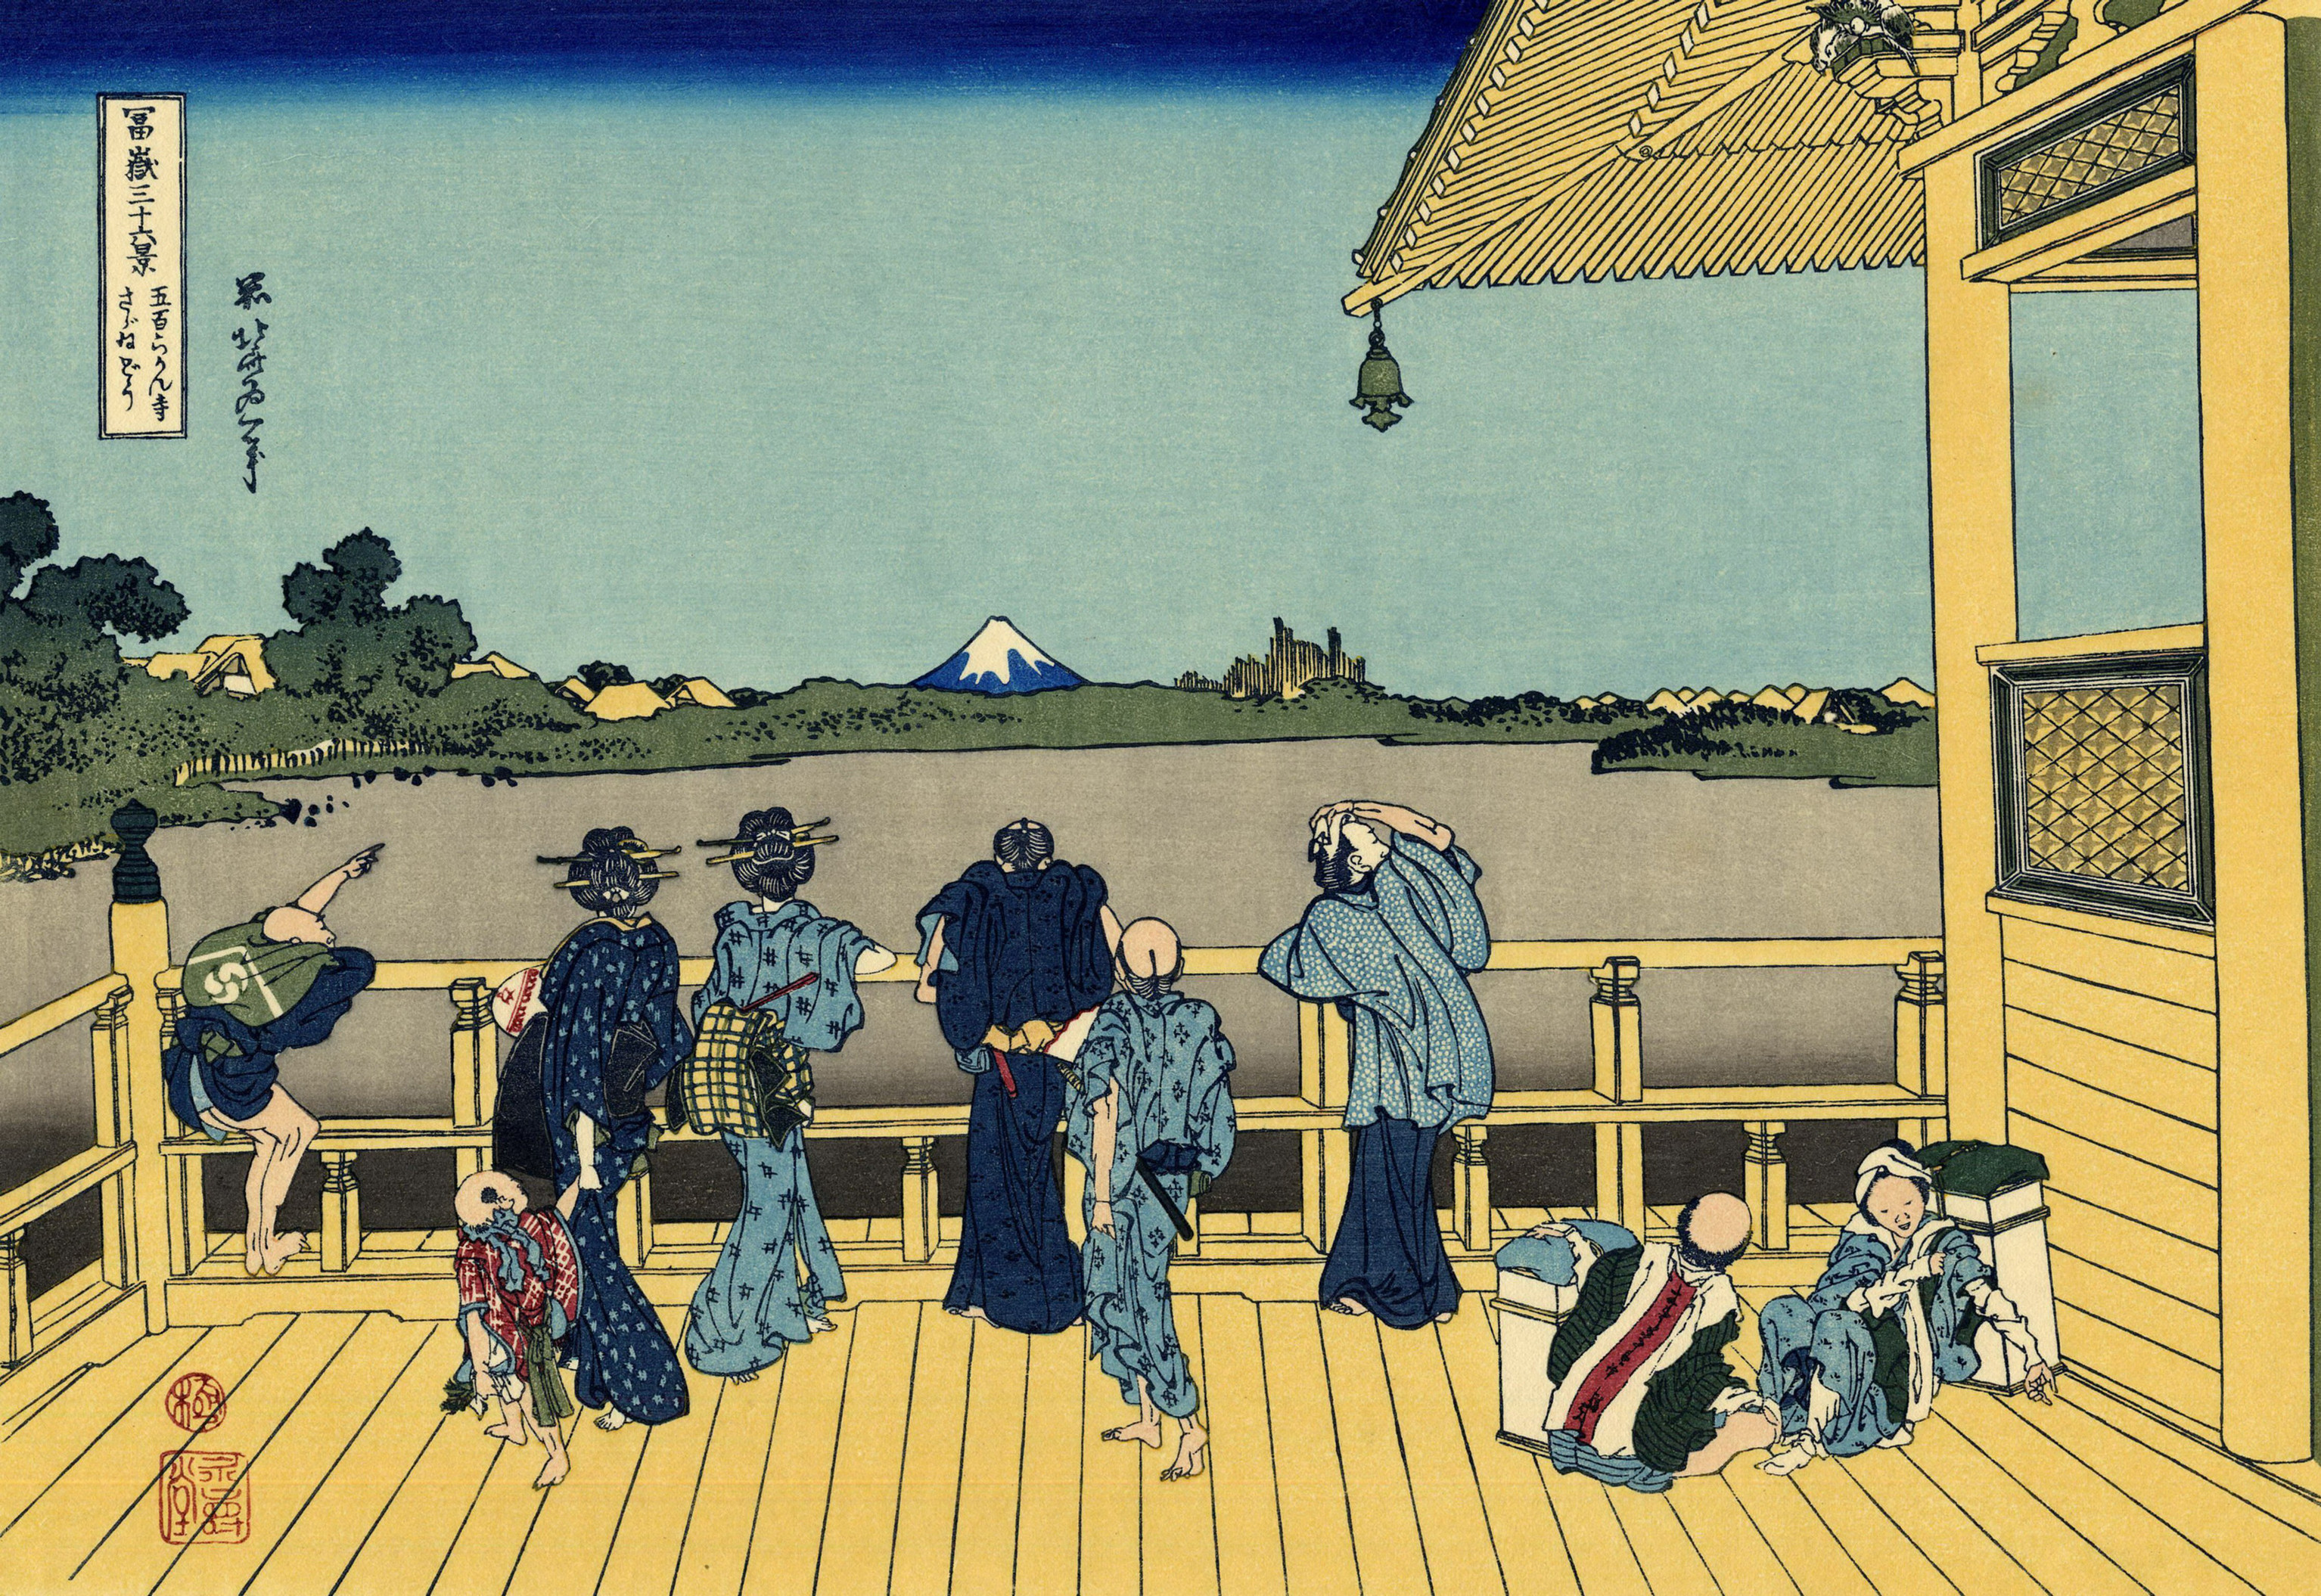 Katsushika Hokusai. Sazai Hall at the Temple of the Five Hundred Arhats, from the series Thirty-six Views of Mount Fuji